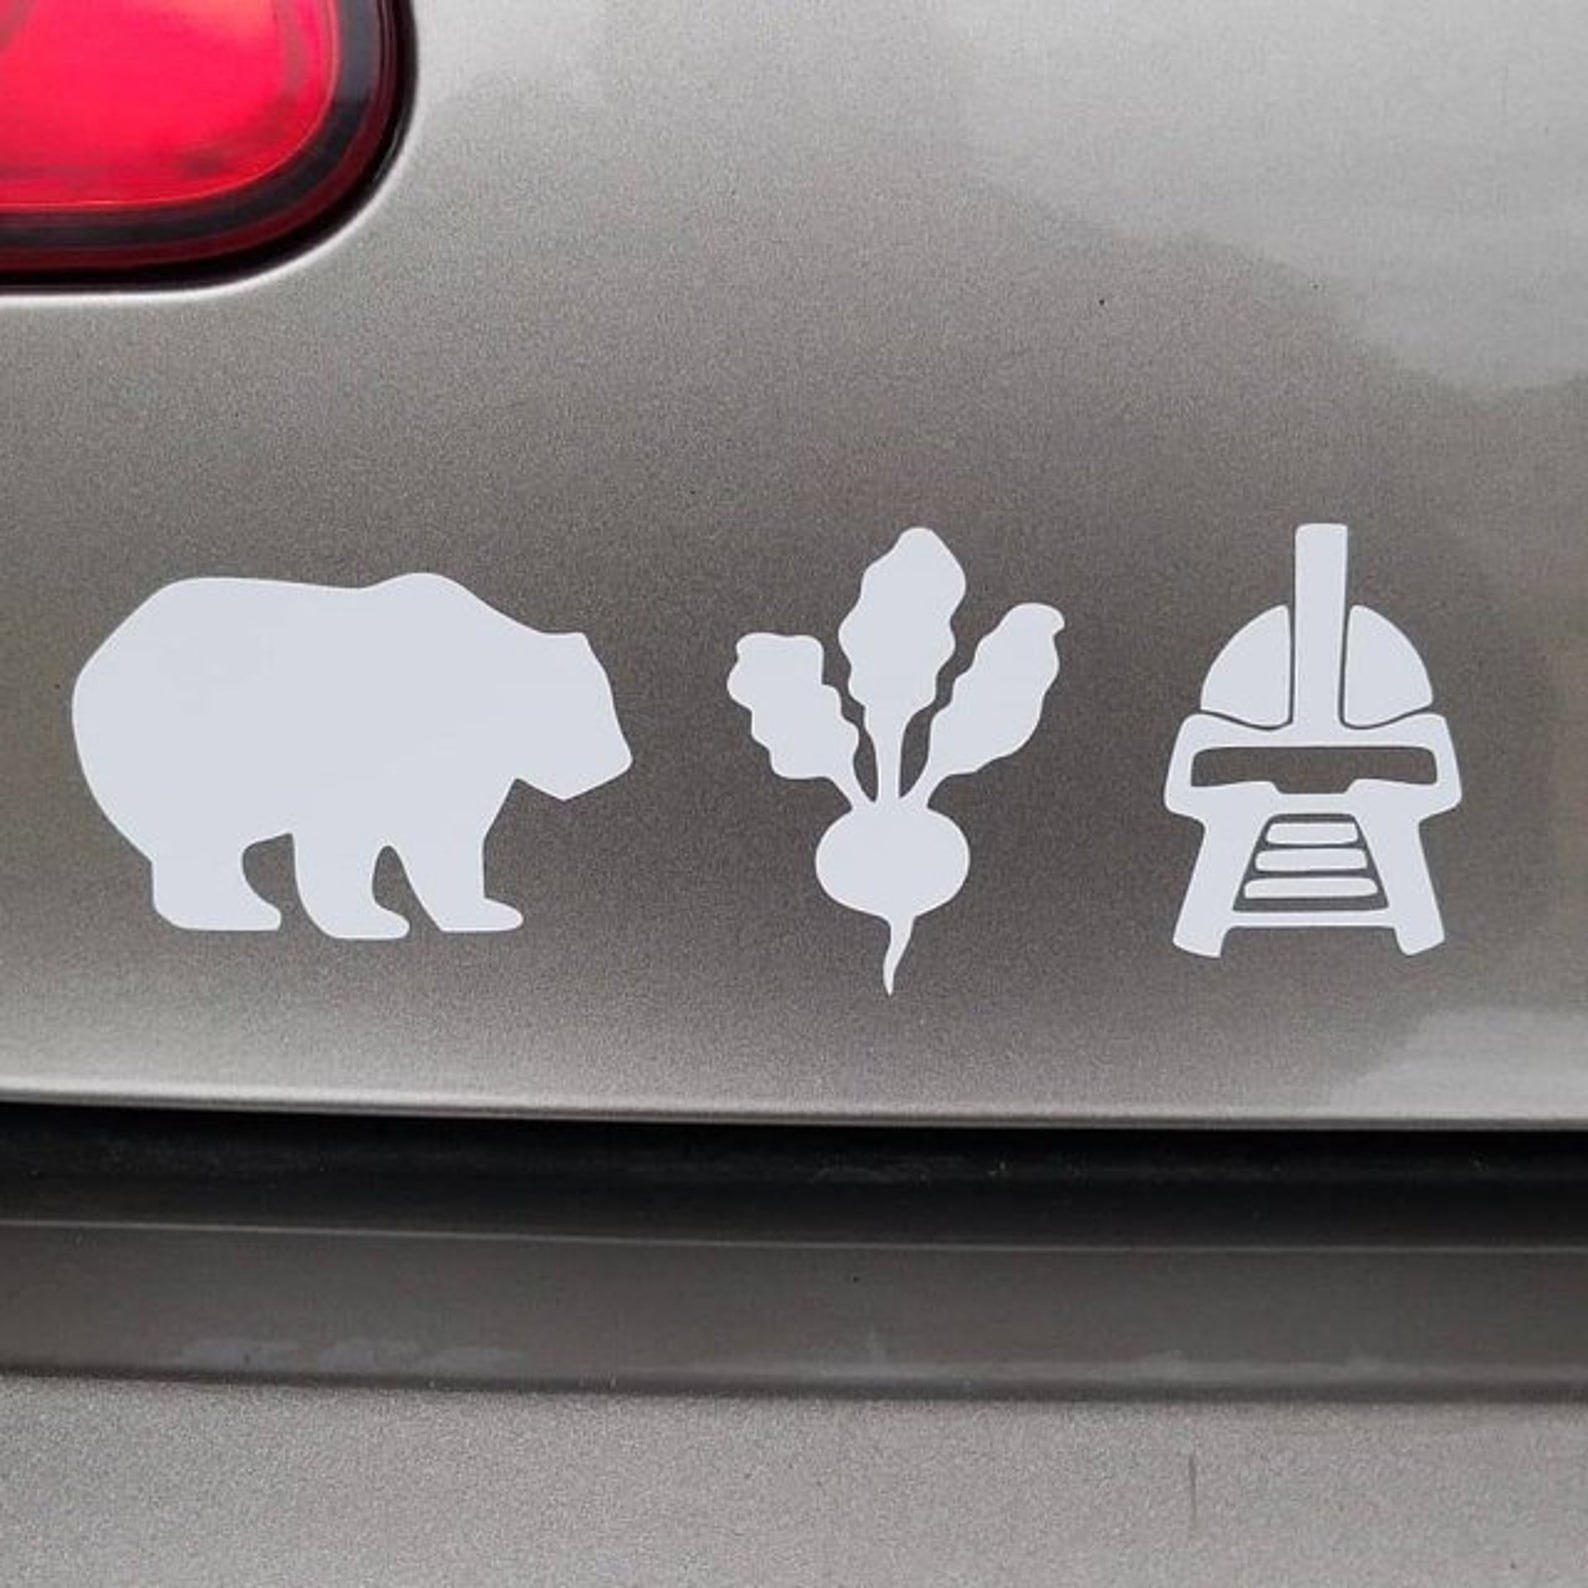 a bear, beet, and Battlestar Galactica decal on a car